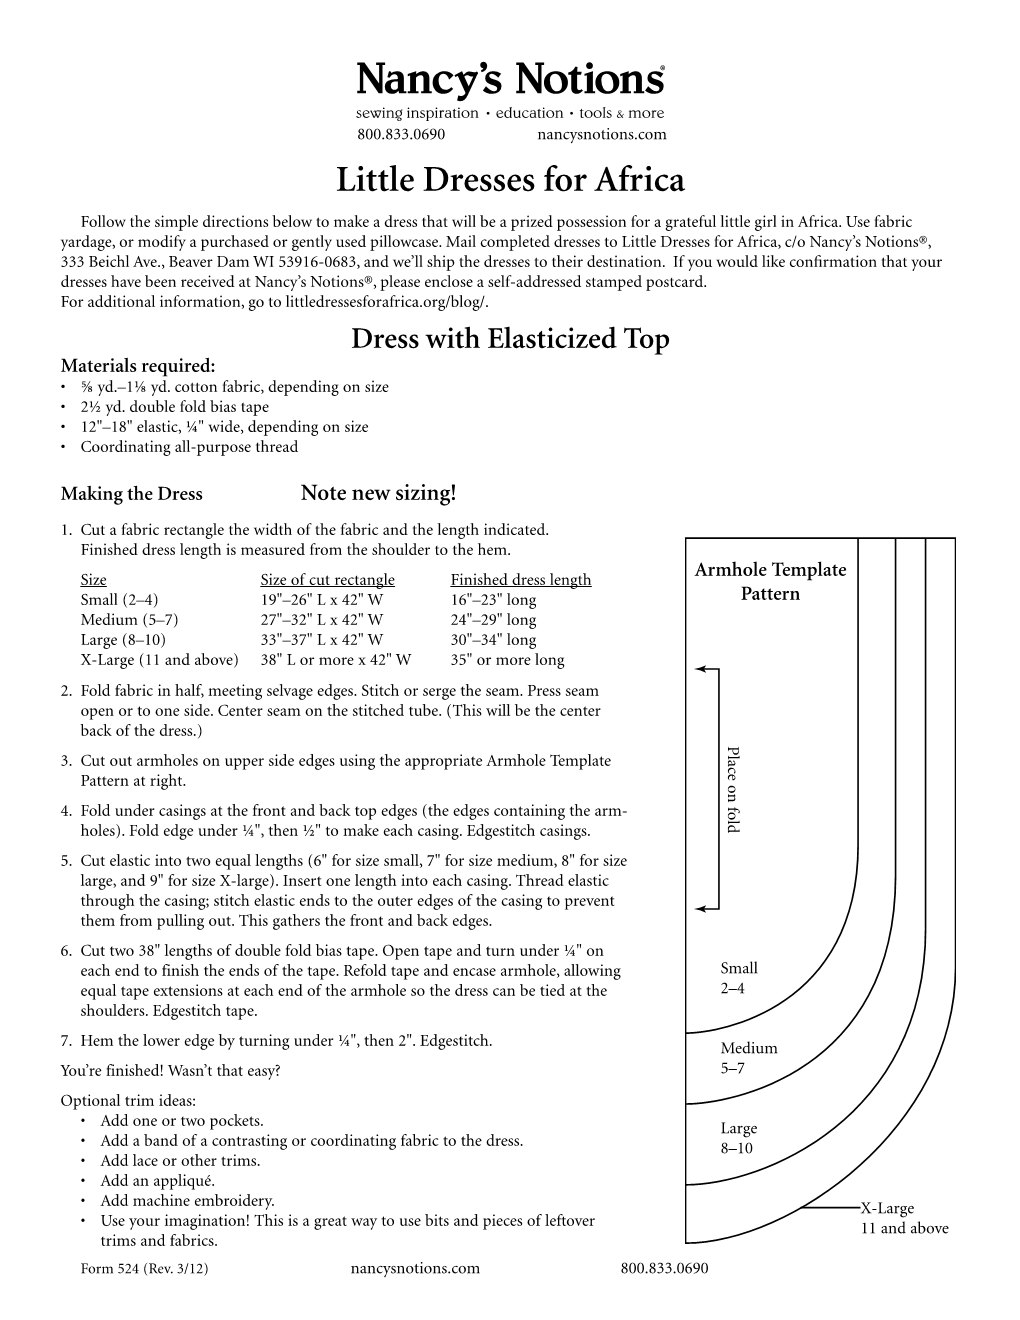 Little Dresses for Africa Pattern